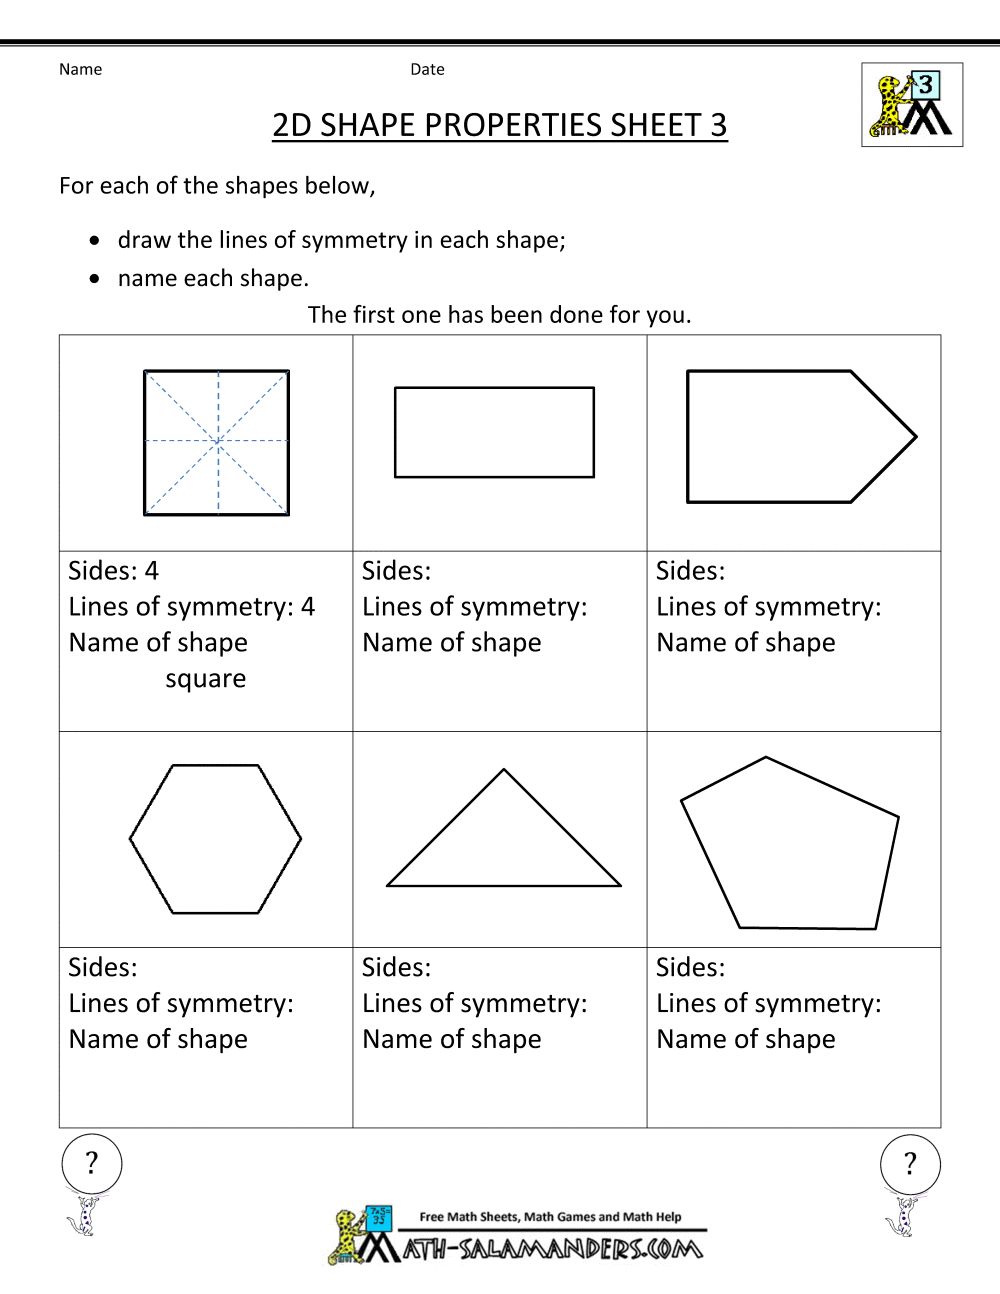 Free geometry homework